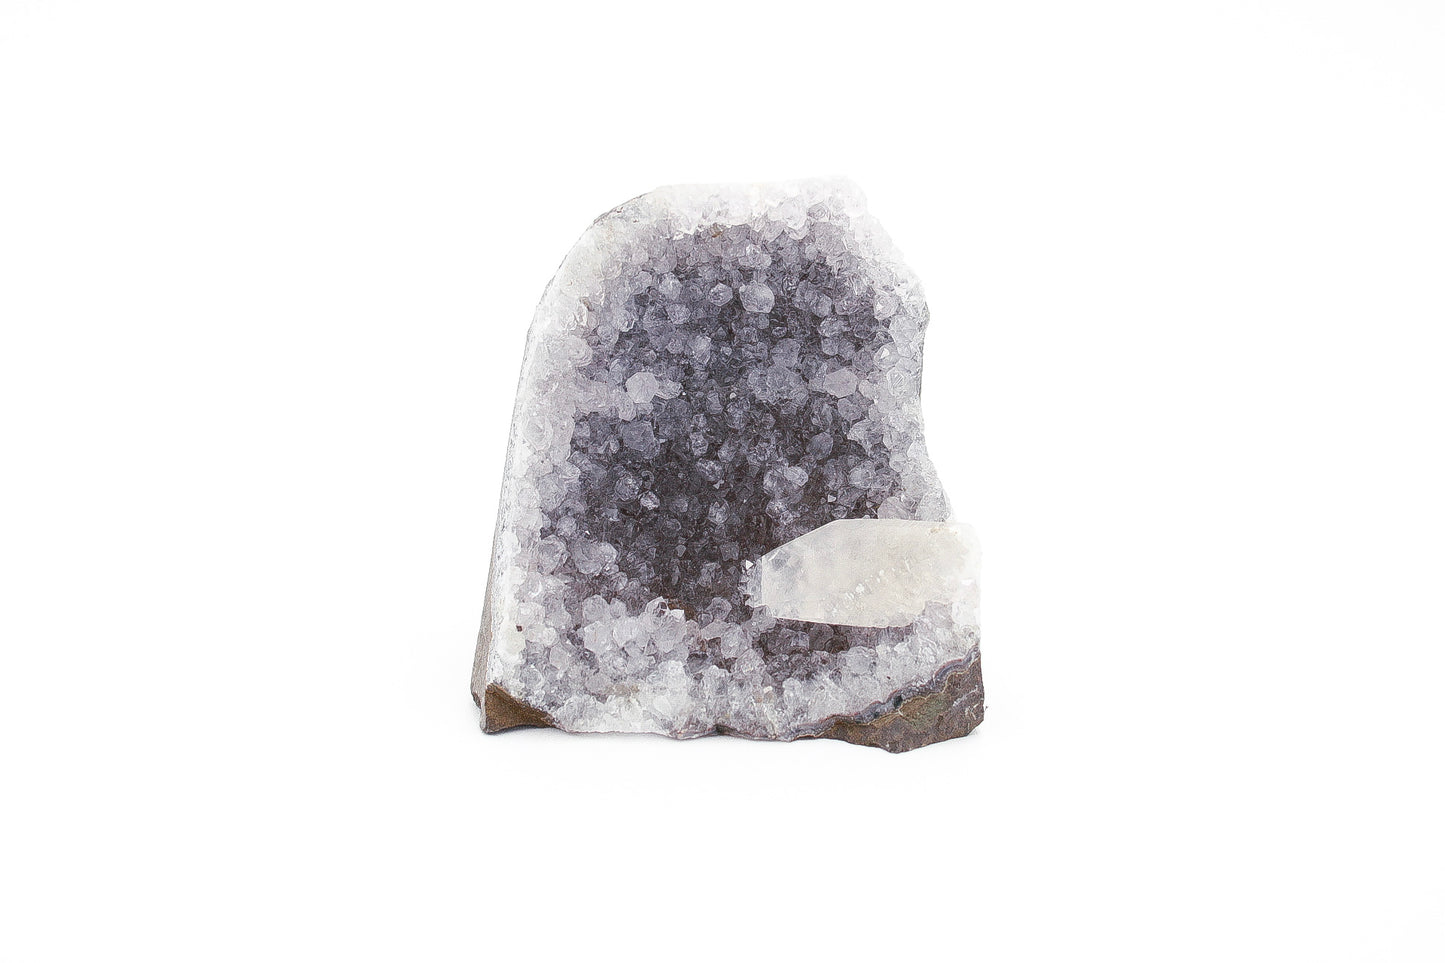 Amethyst with Calcite Specimen